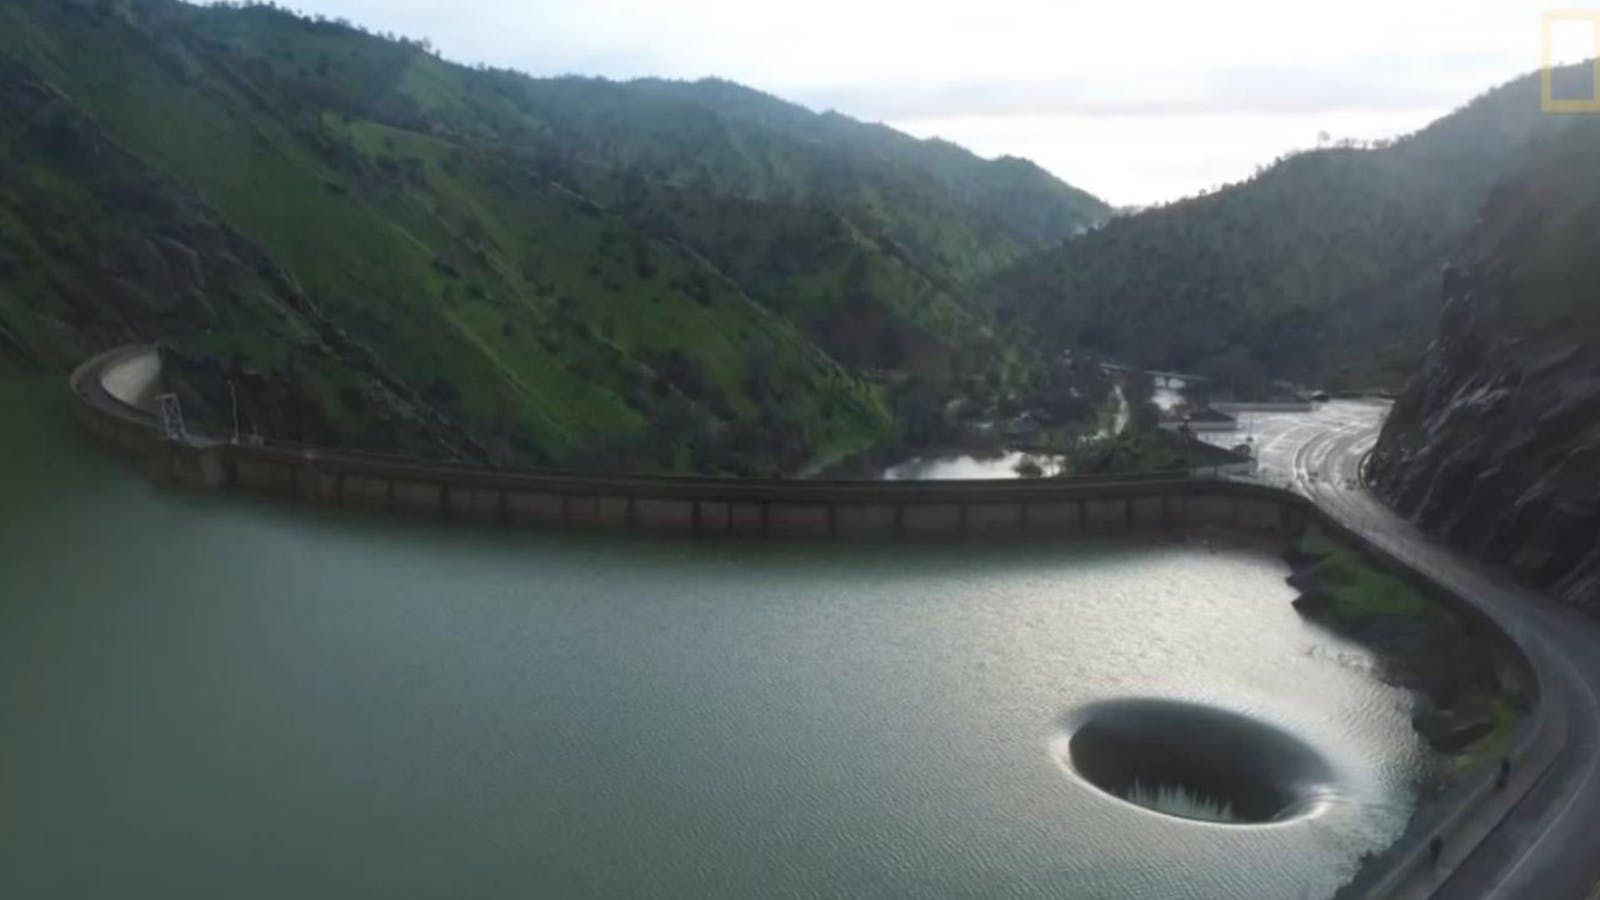 Spillway in a Dam’s Reservoir - Northern California